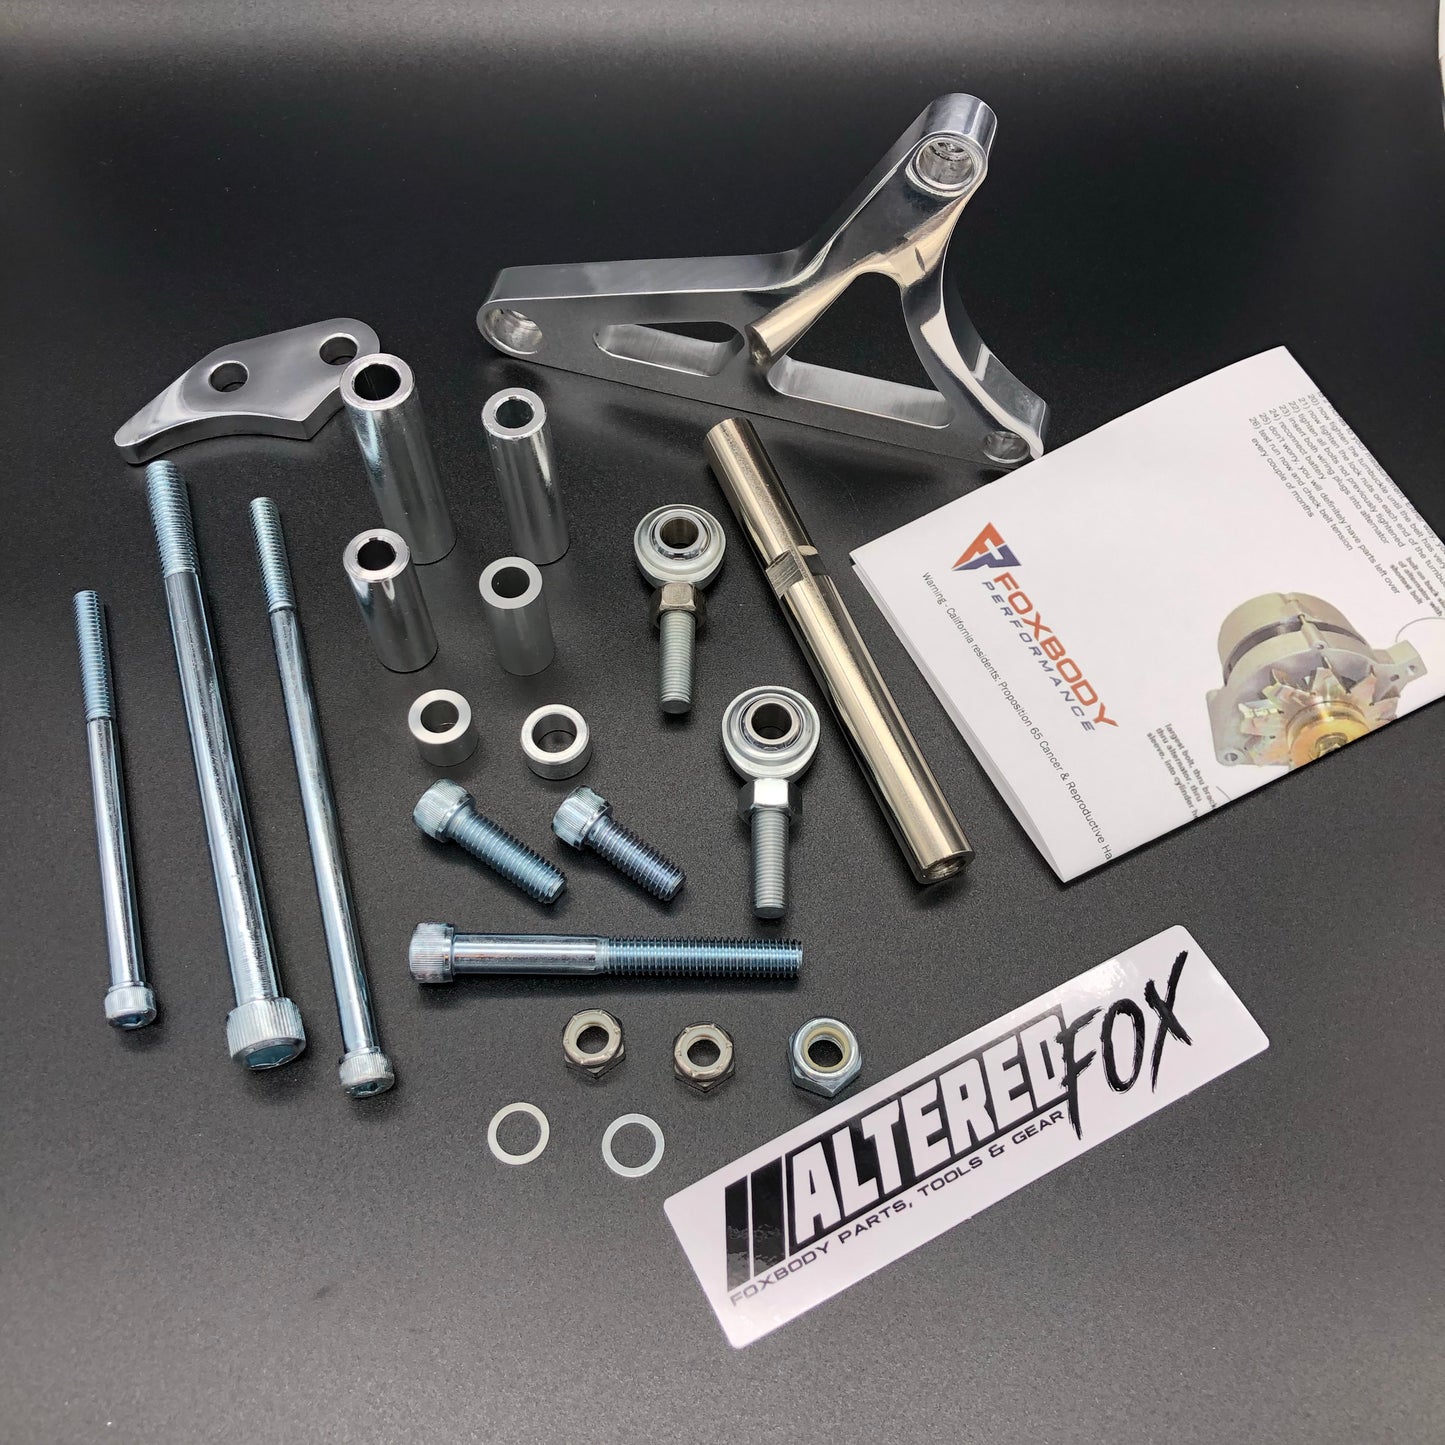 Alternator Bracket Kit from Foxbody Performance